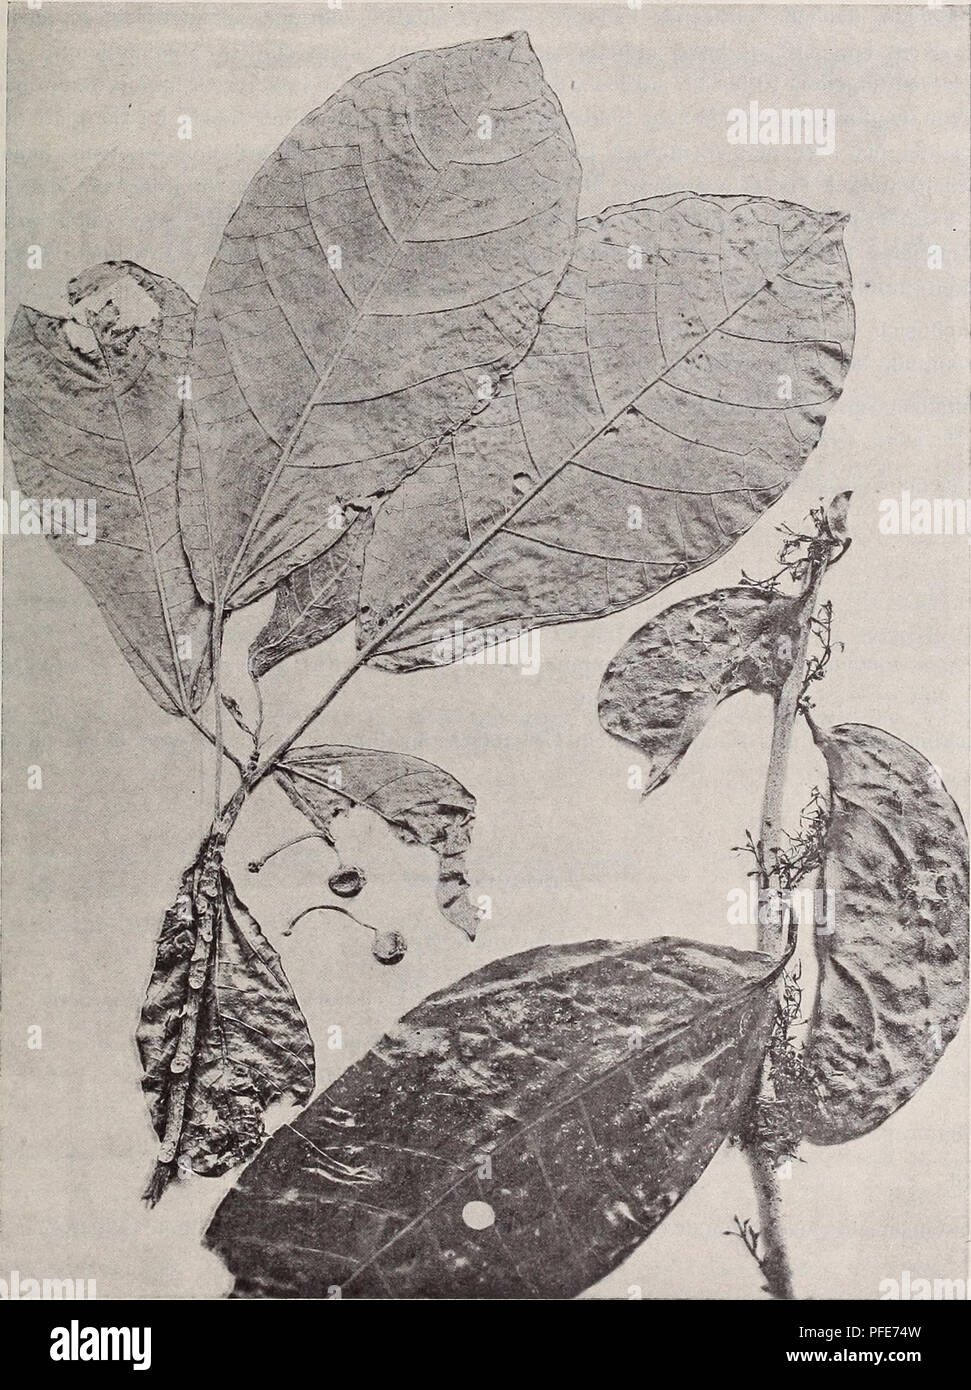 . Denkschriften - Österreichische Akademie der Wissenschaften. Bot. u. zool. Ergebn. von dm Samoa- u. Salomonsinseln. Oleaceae. Linociera Sw. Fig. 27. 589. Ficus longipcdunculata Rech. 2/3 der nat. Größe. Linociera Hahlii Rech. 2/3 dgr nat. Größe. * N. S. Linociera Hahlii Reching. in Fedde, Rep. n. sp., Bd. XI (1912), p. 185. Arbor, ramis floriferis glabris albis, internodiis ramorum foliis multo brevioribus. Foliis petiolatis coriaceis integris magnis glabris, ovato-oblongis, utrinque acuminatis, media parte latissimis, venis secun-. Please note that these images are extracted from scanned pa Stock Photo